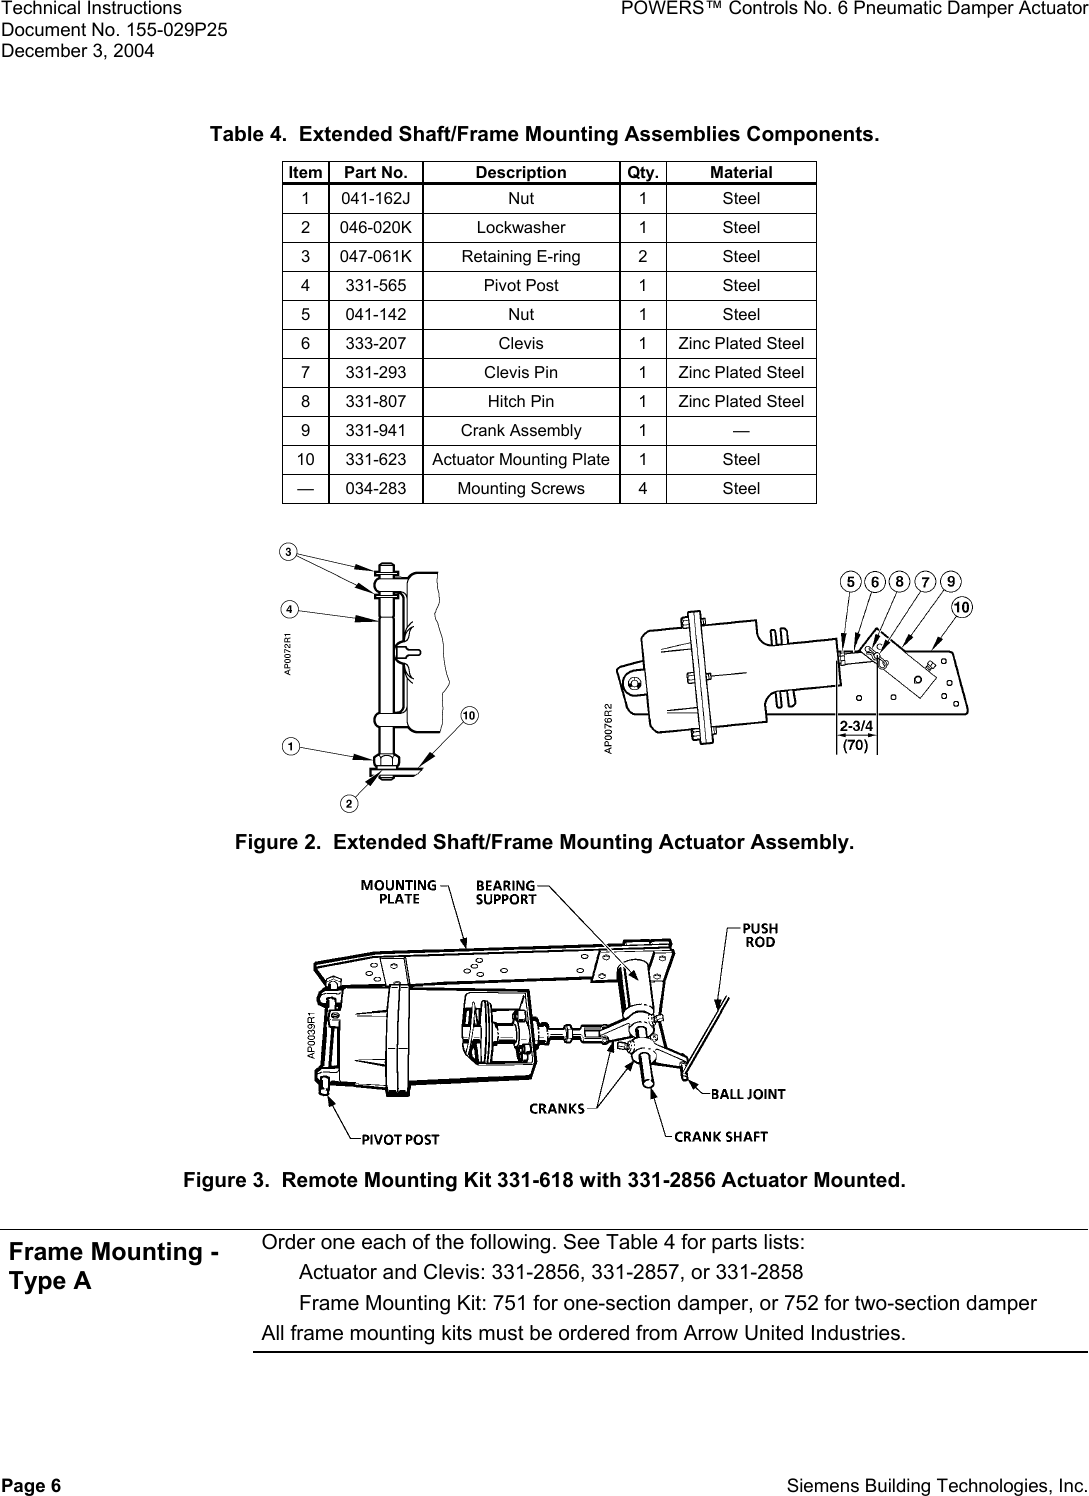 Page 6 of 12 - Siemens Siemens-331-2856-332-2856-Ap-331-3-Users-Manual- Powers Control - No. 6 Pneumatic Damper Actuator  Siemens-331-2856-332-2856-ap-331-3-users-manual